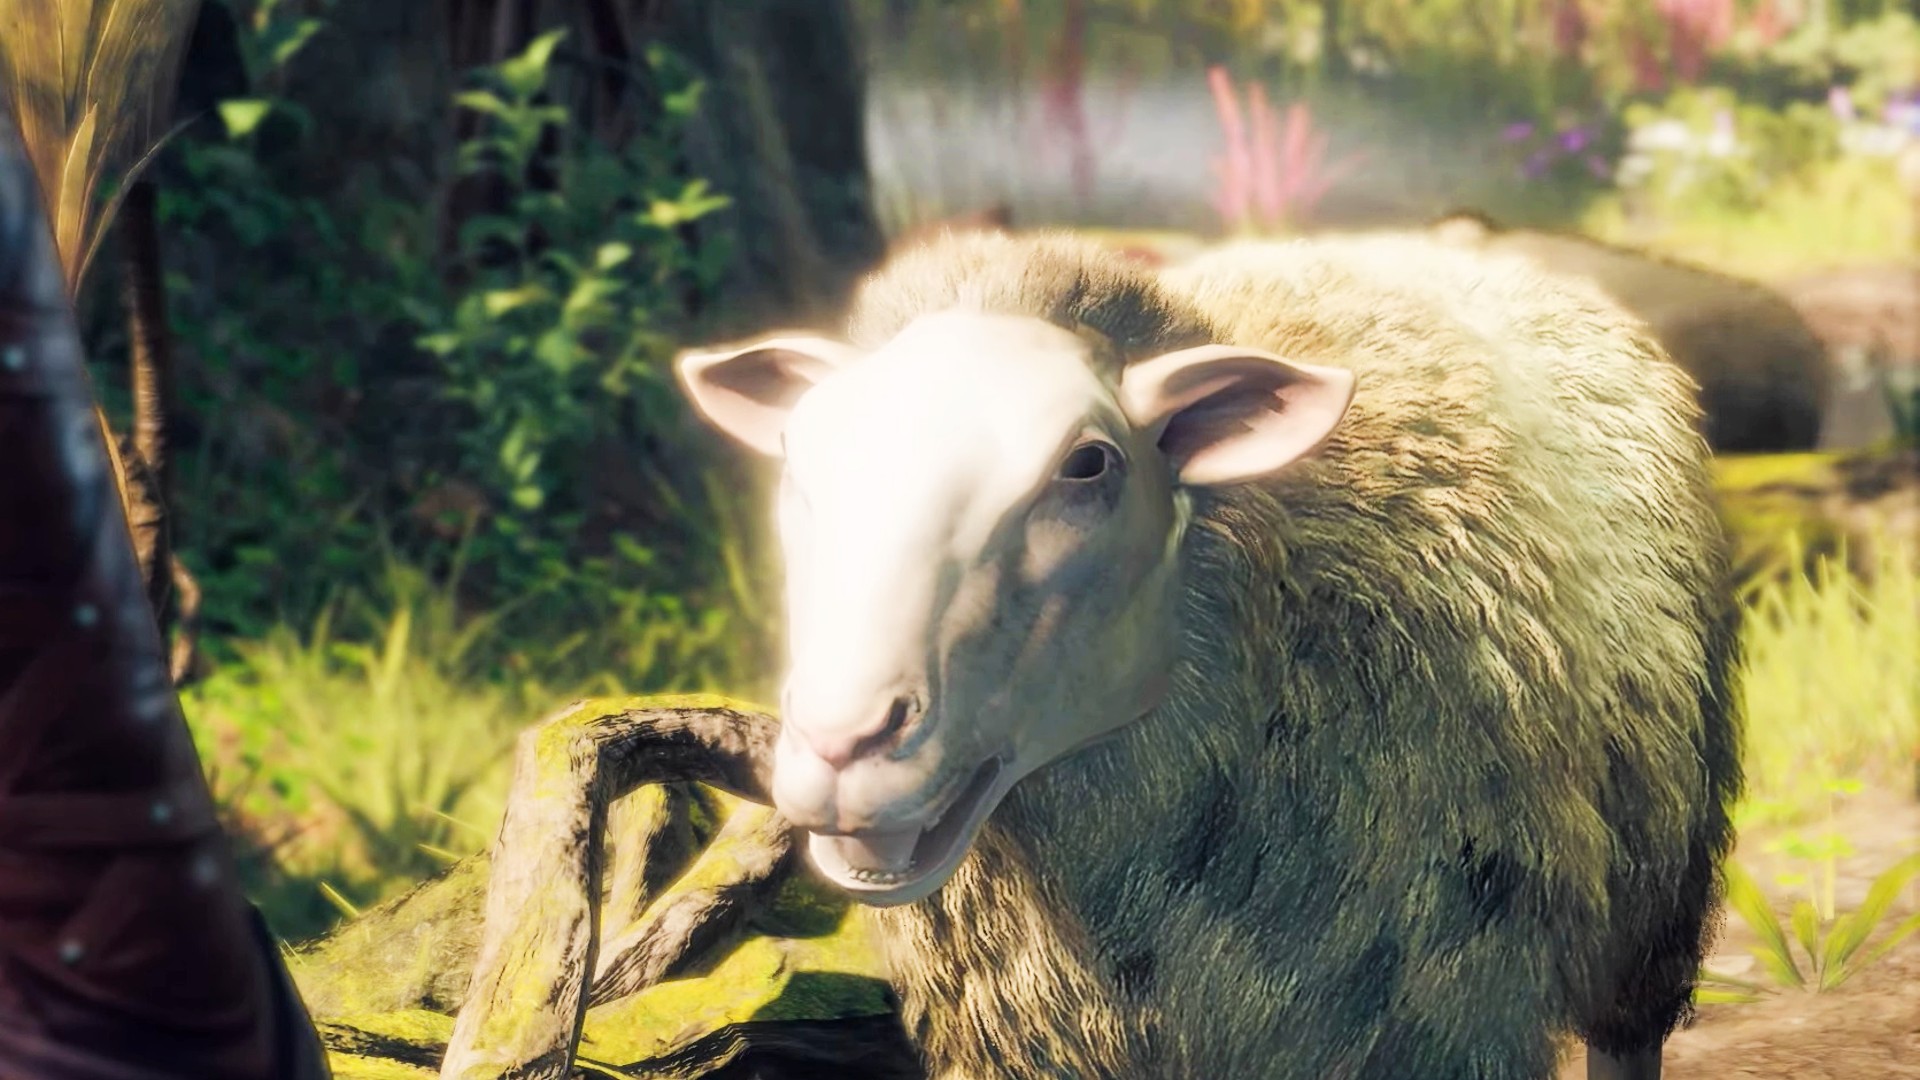 A sheep in Baldur's Gate 3 looks at the screen